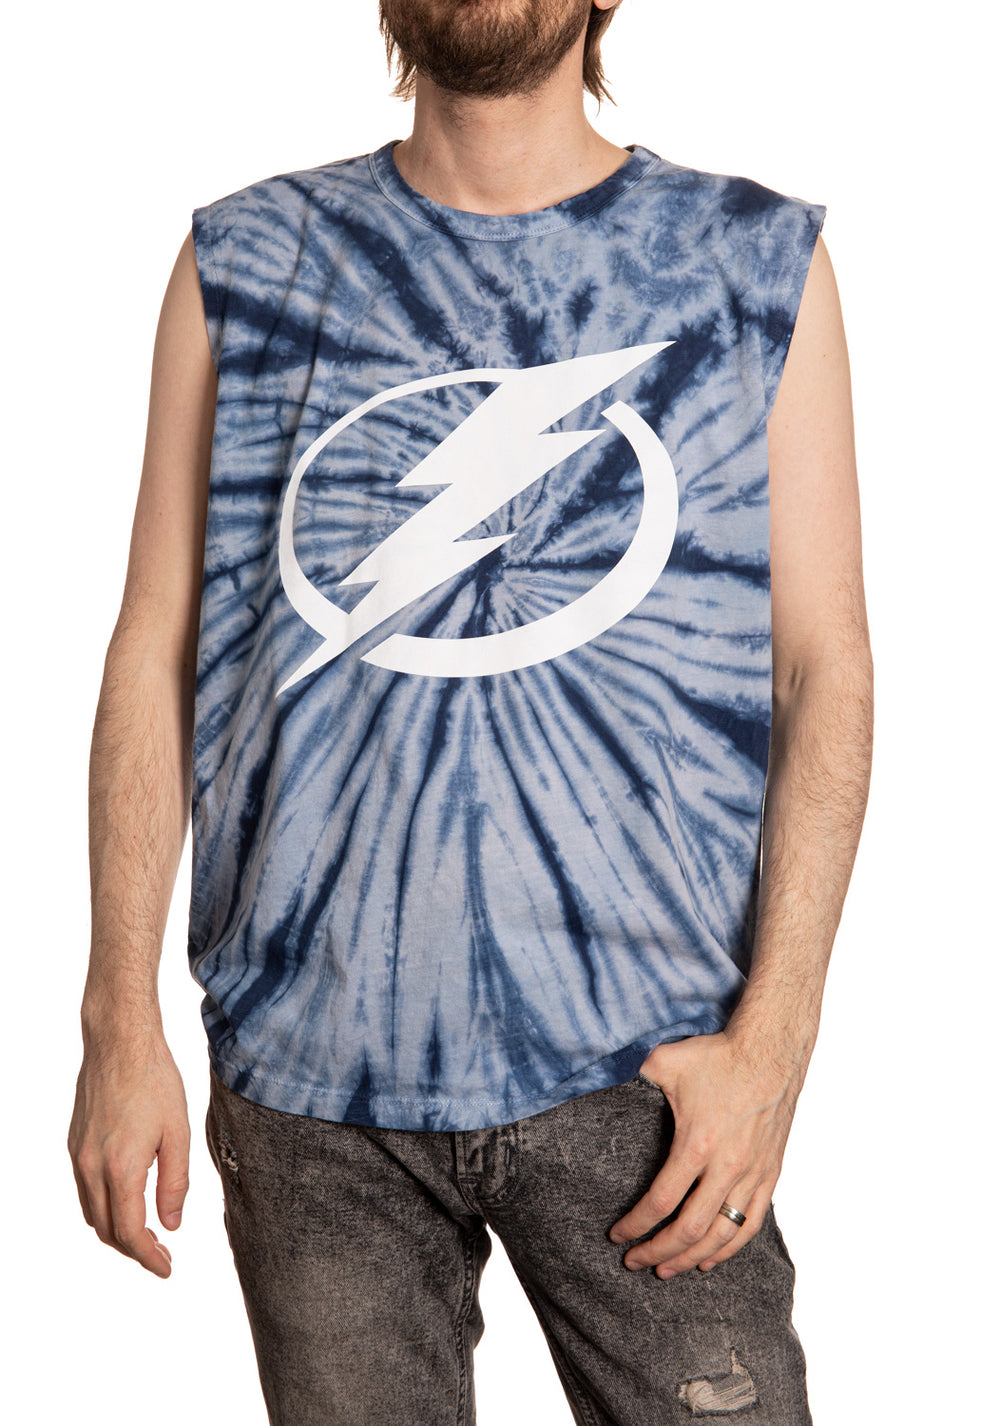 Tampa Bay Lightning Spiral Tie Dye Sleeveless Shirt Front View